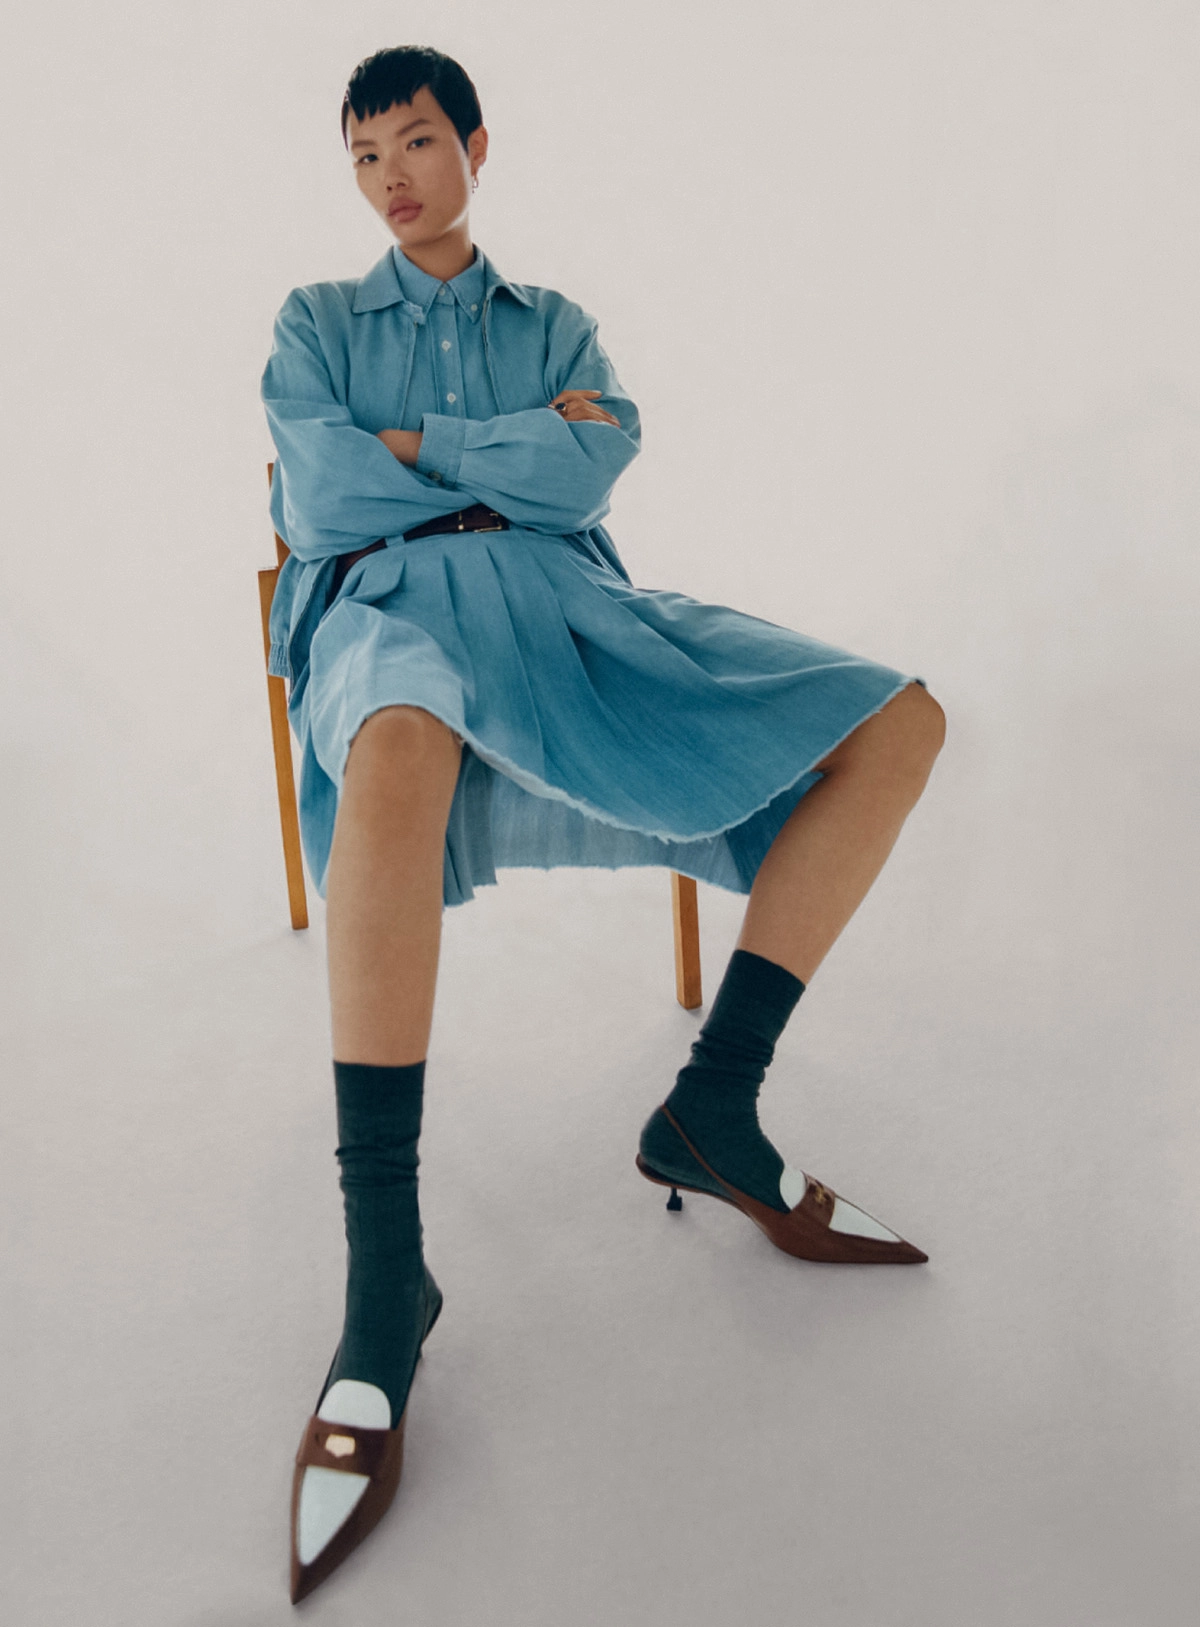 Kayako Higuchi by Felicity Ingram for British Vogue July 2022